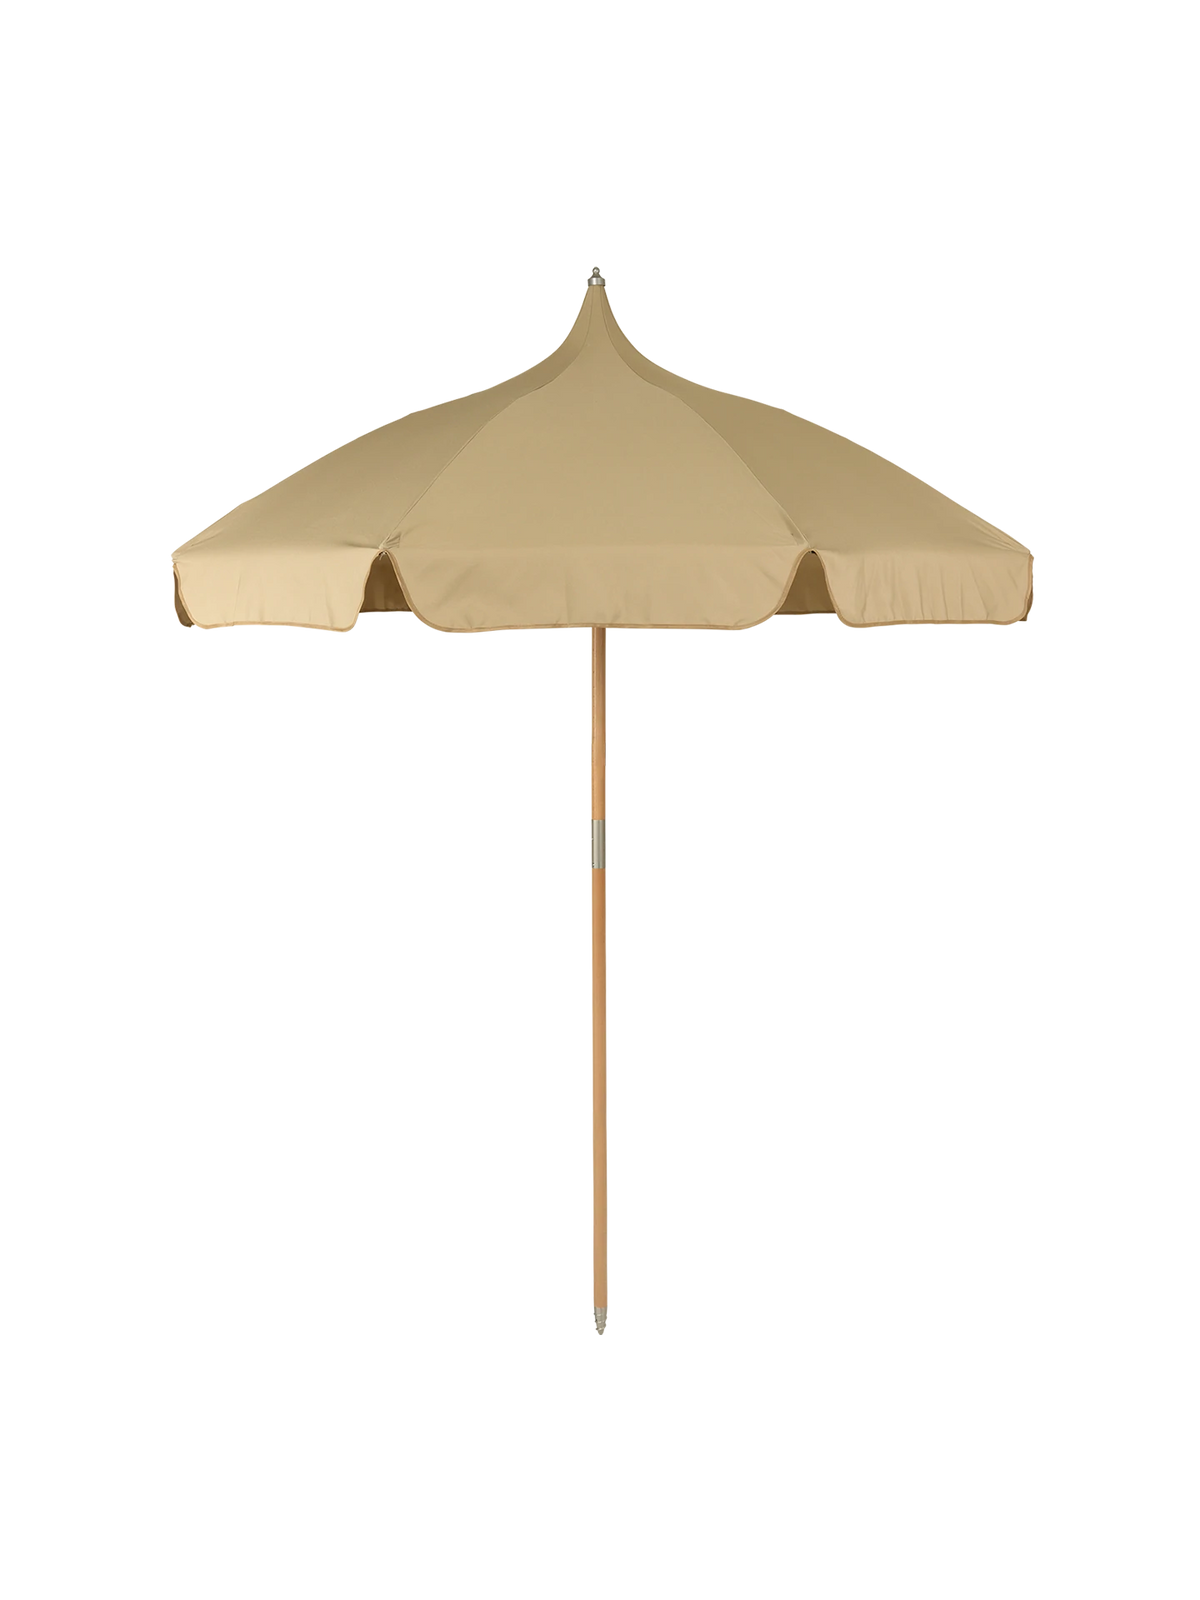 Lull Umbrella by Ferm Living